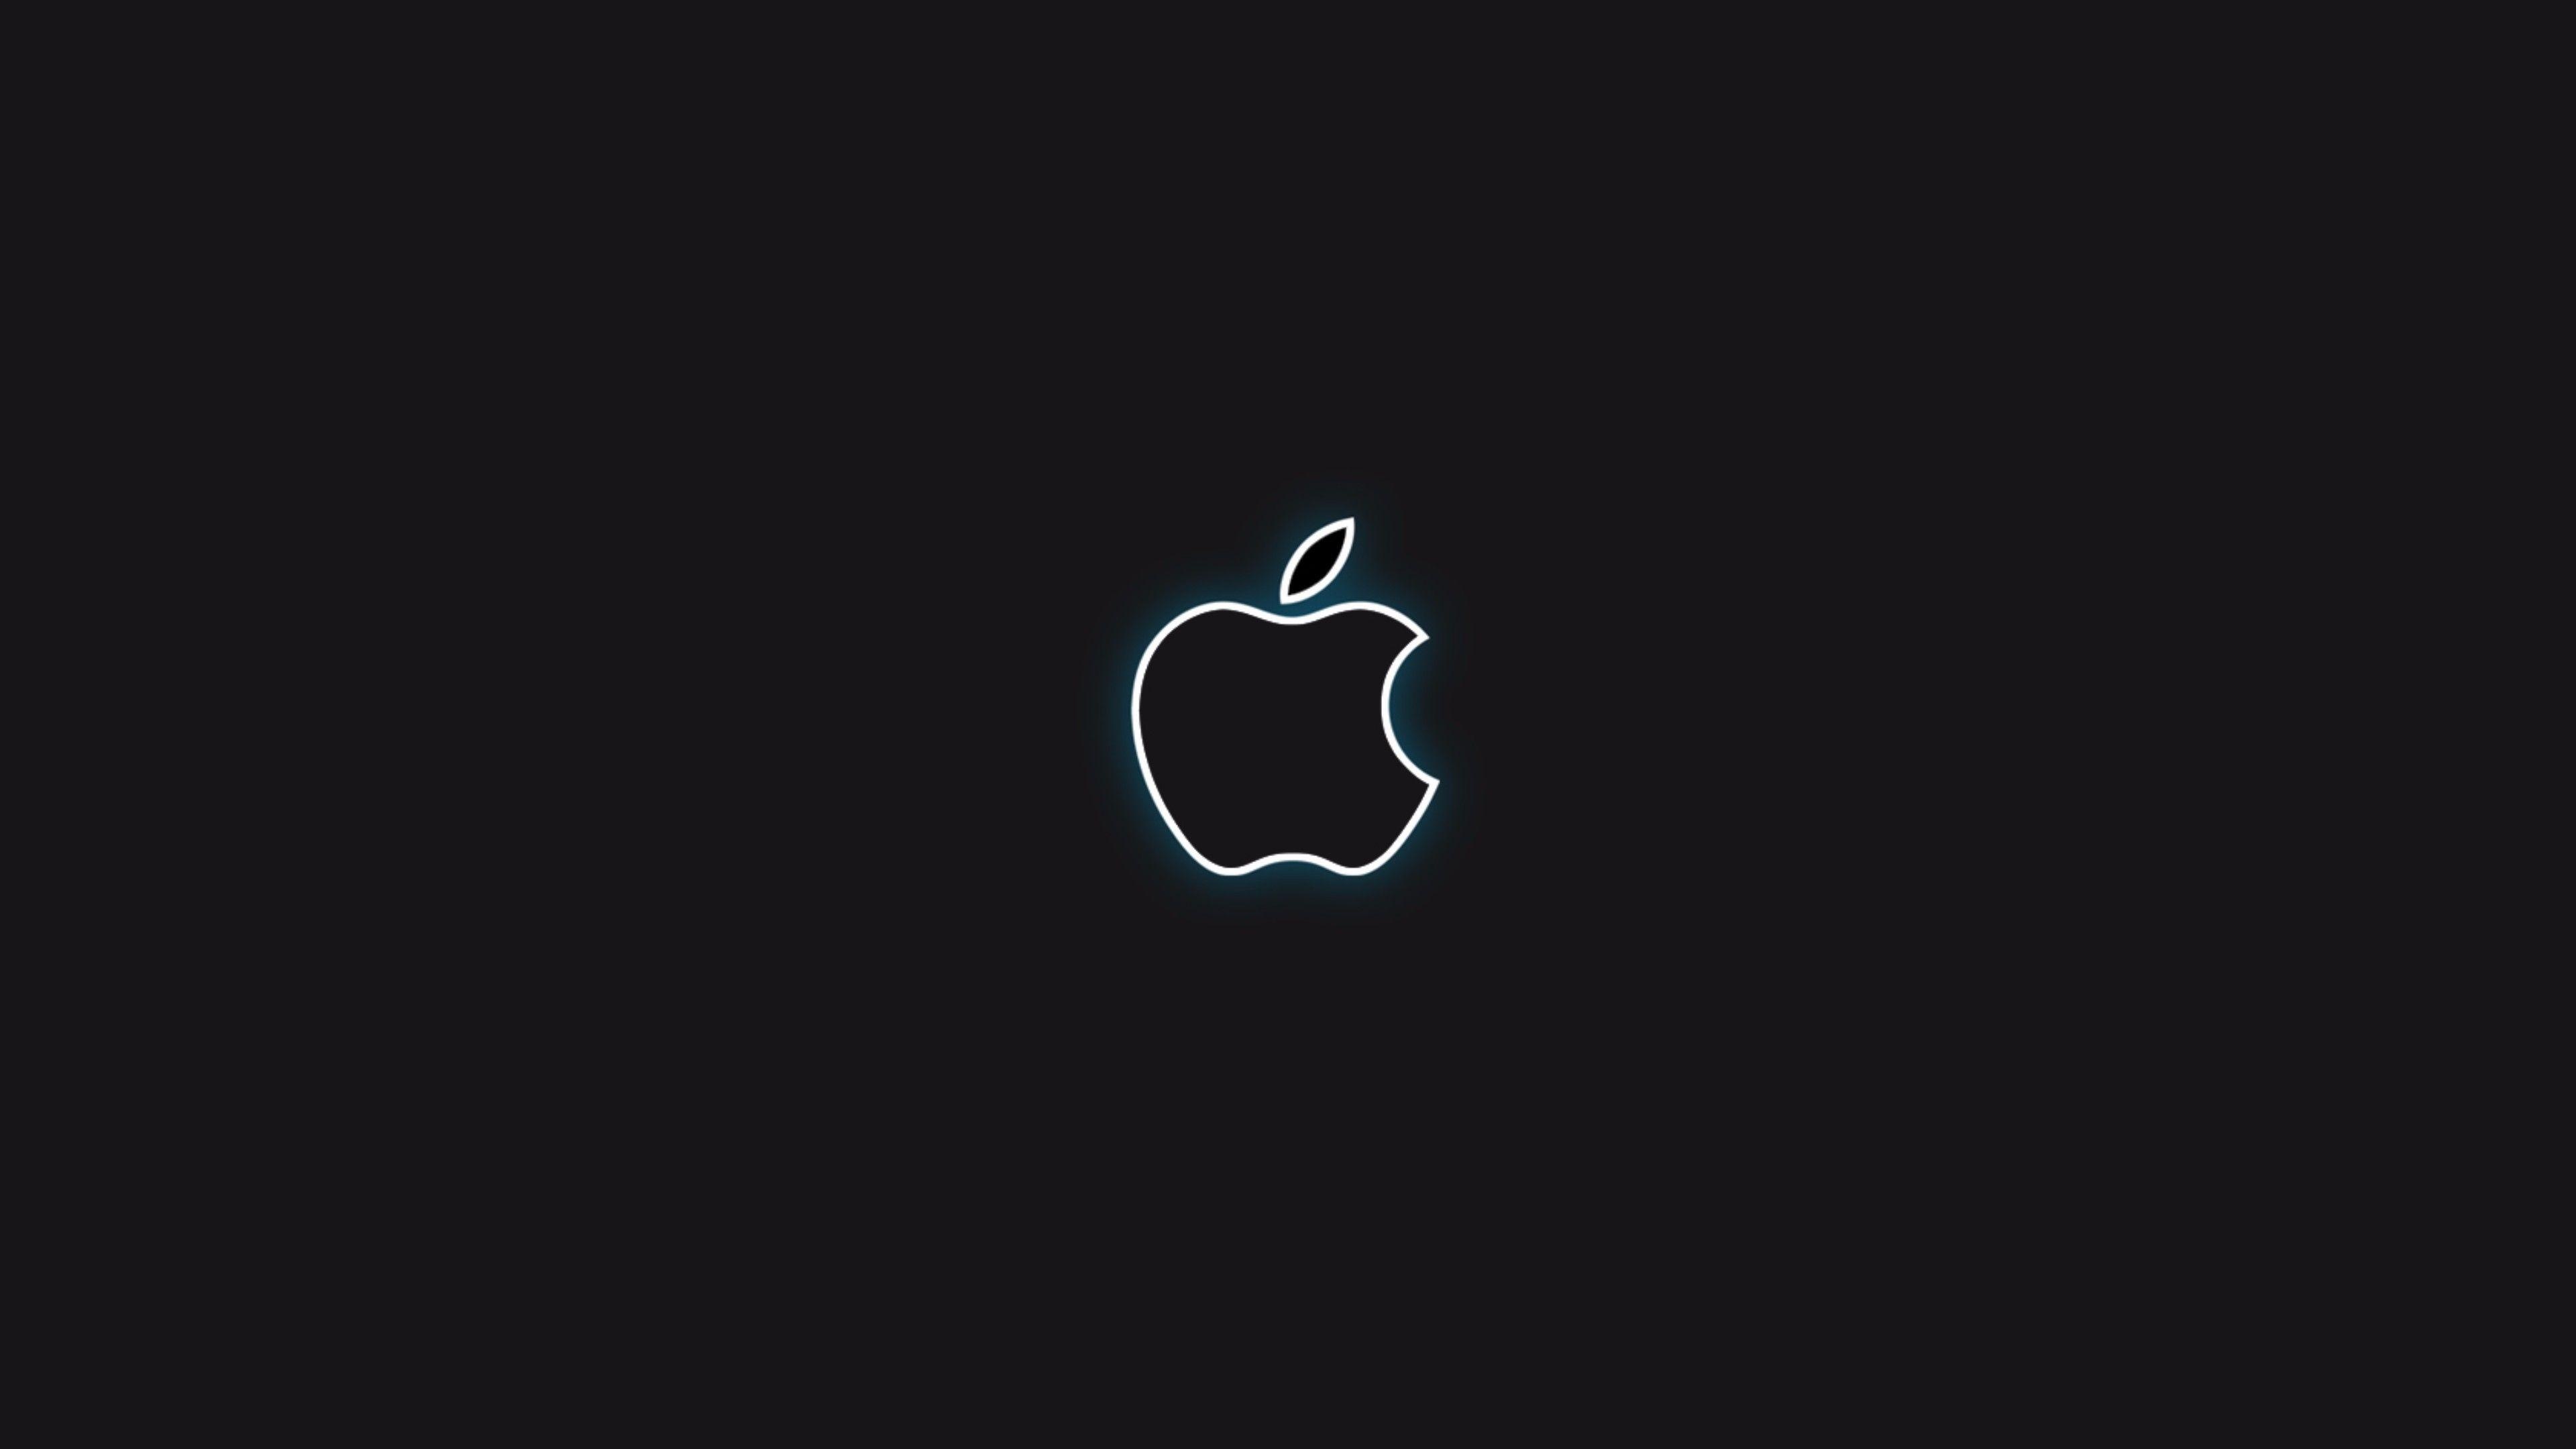 iMac Logo, Sleek and modern, Apple brand recognition, Stylish design, 3840x2160 4K Desktop